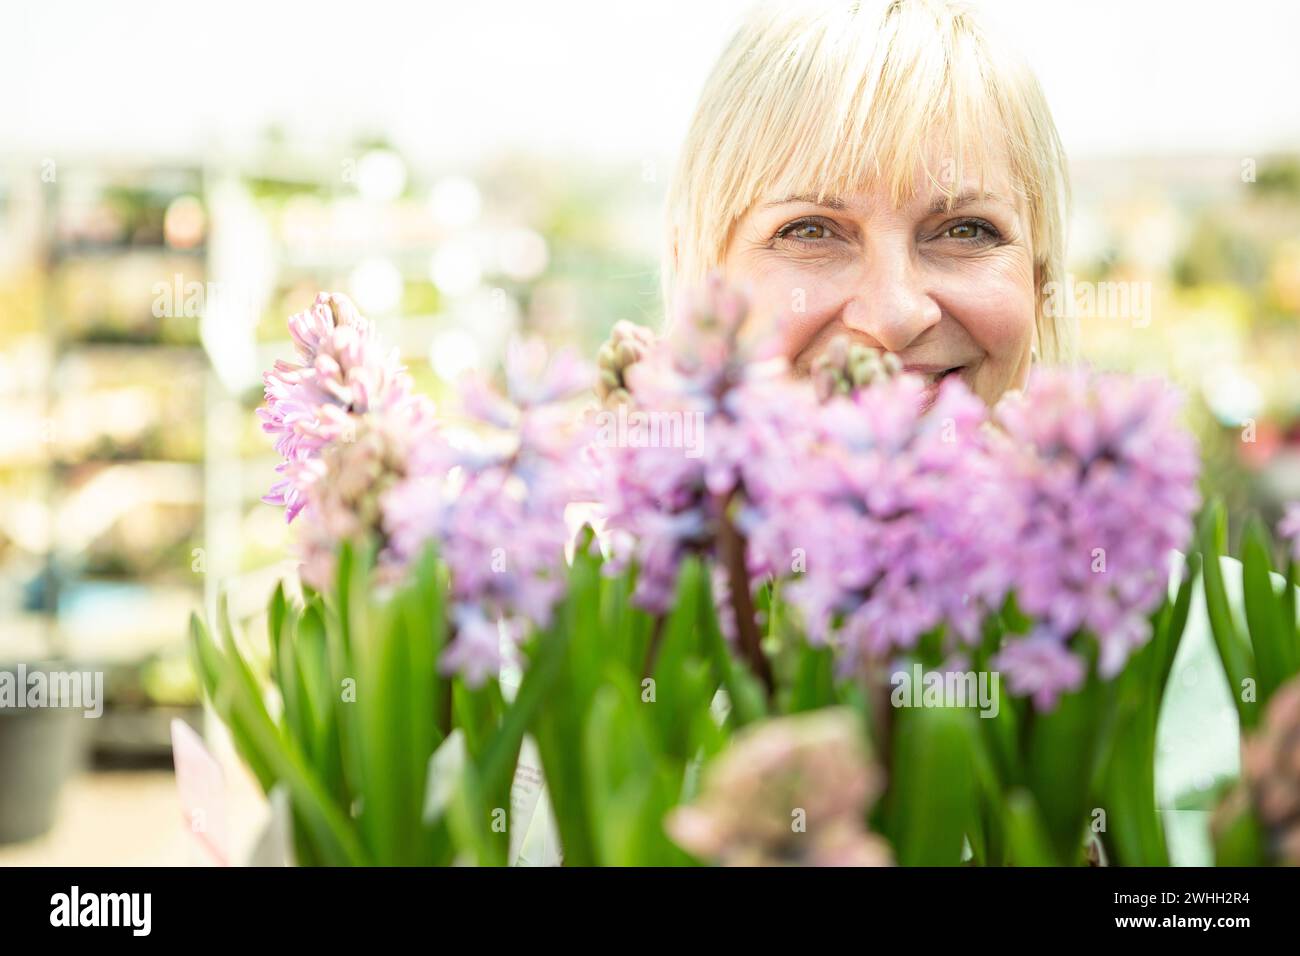 Gardener with flowers Stock Photo